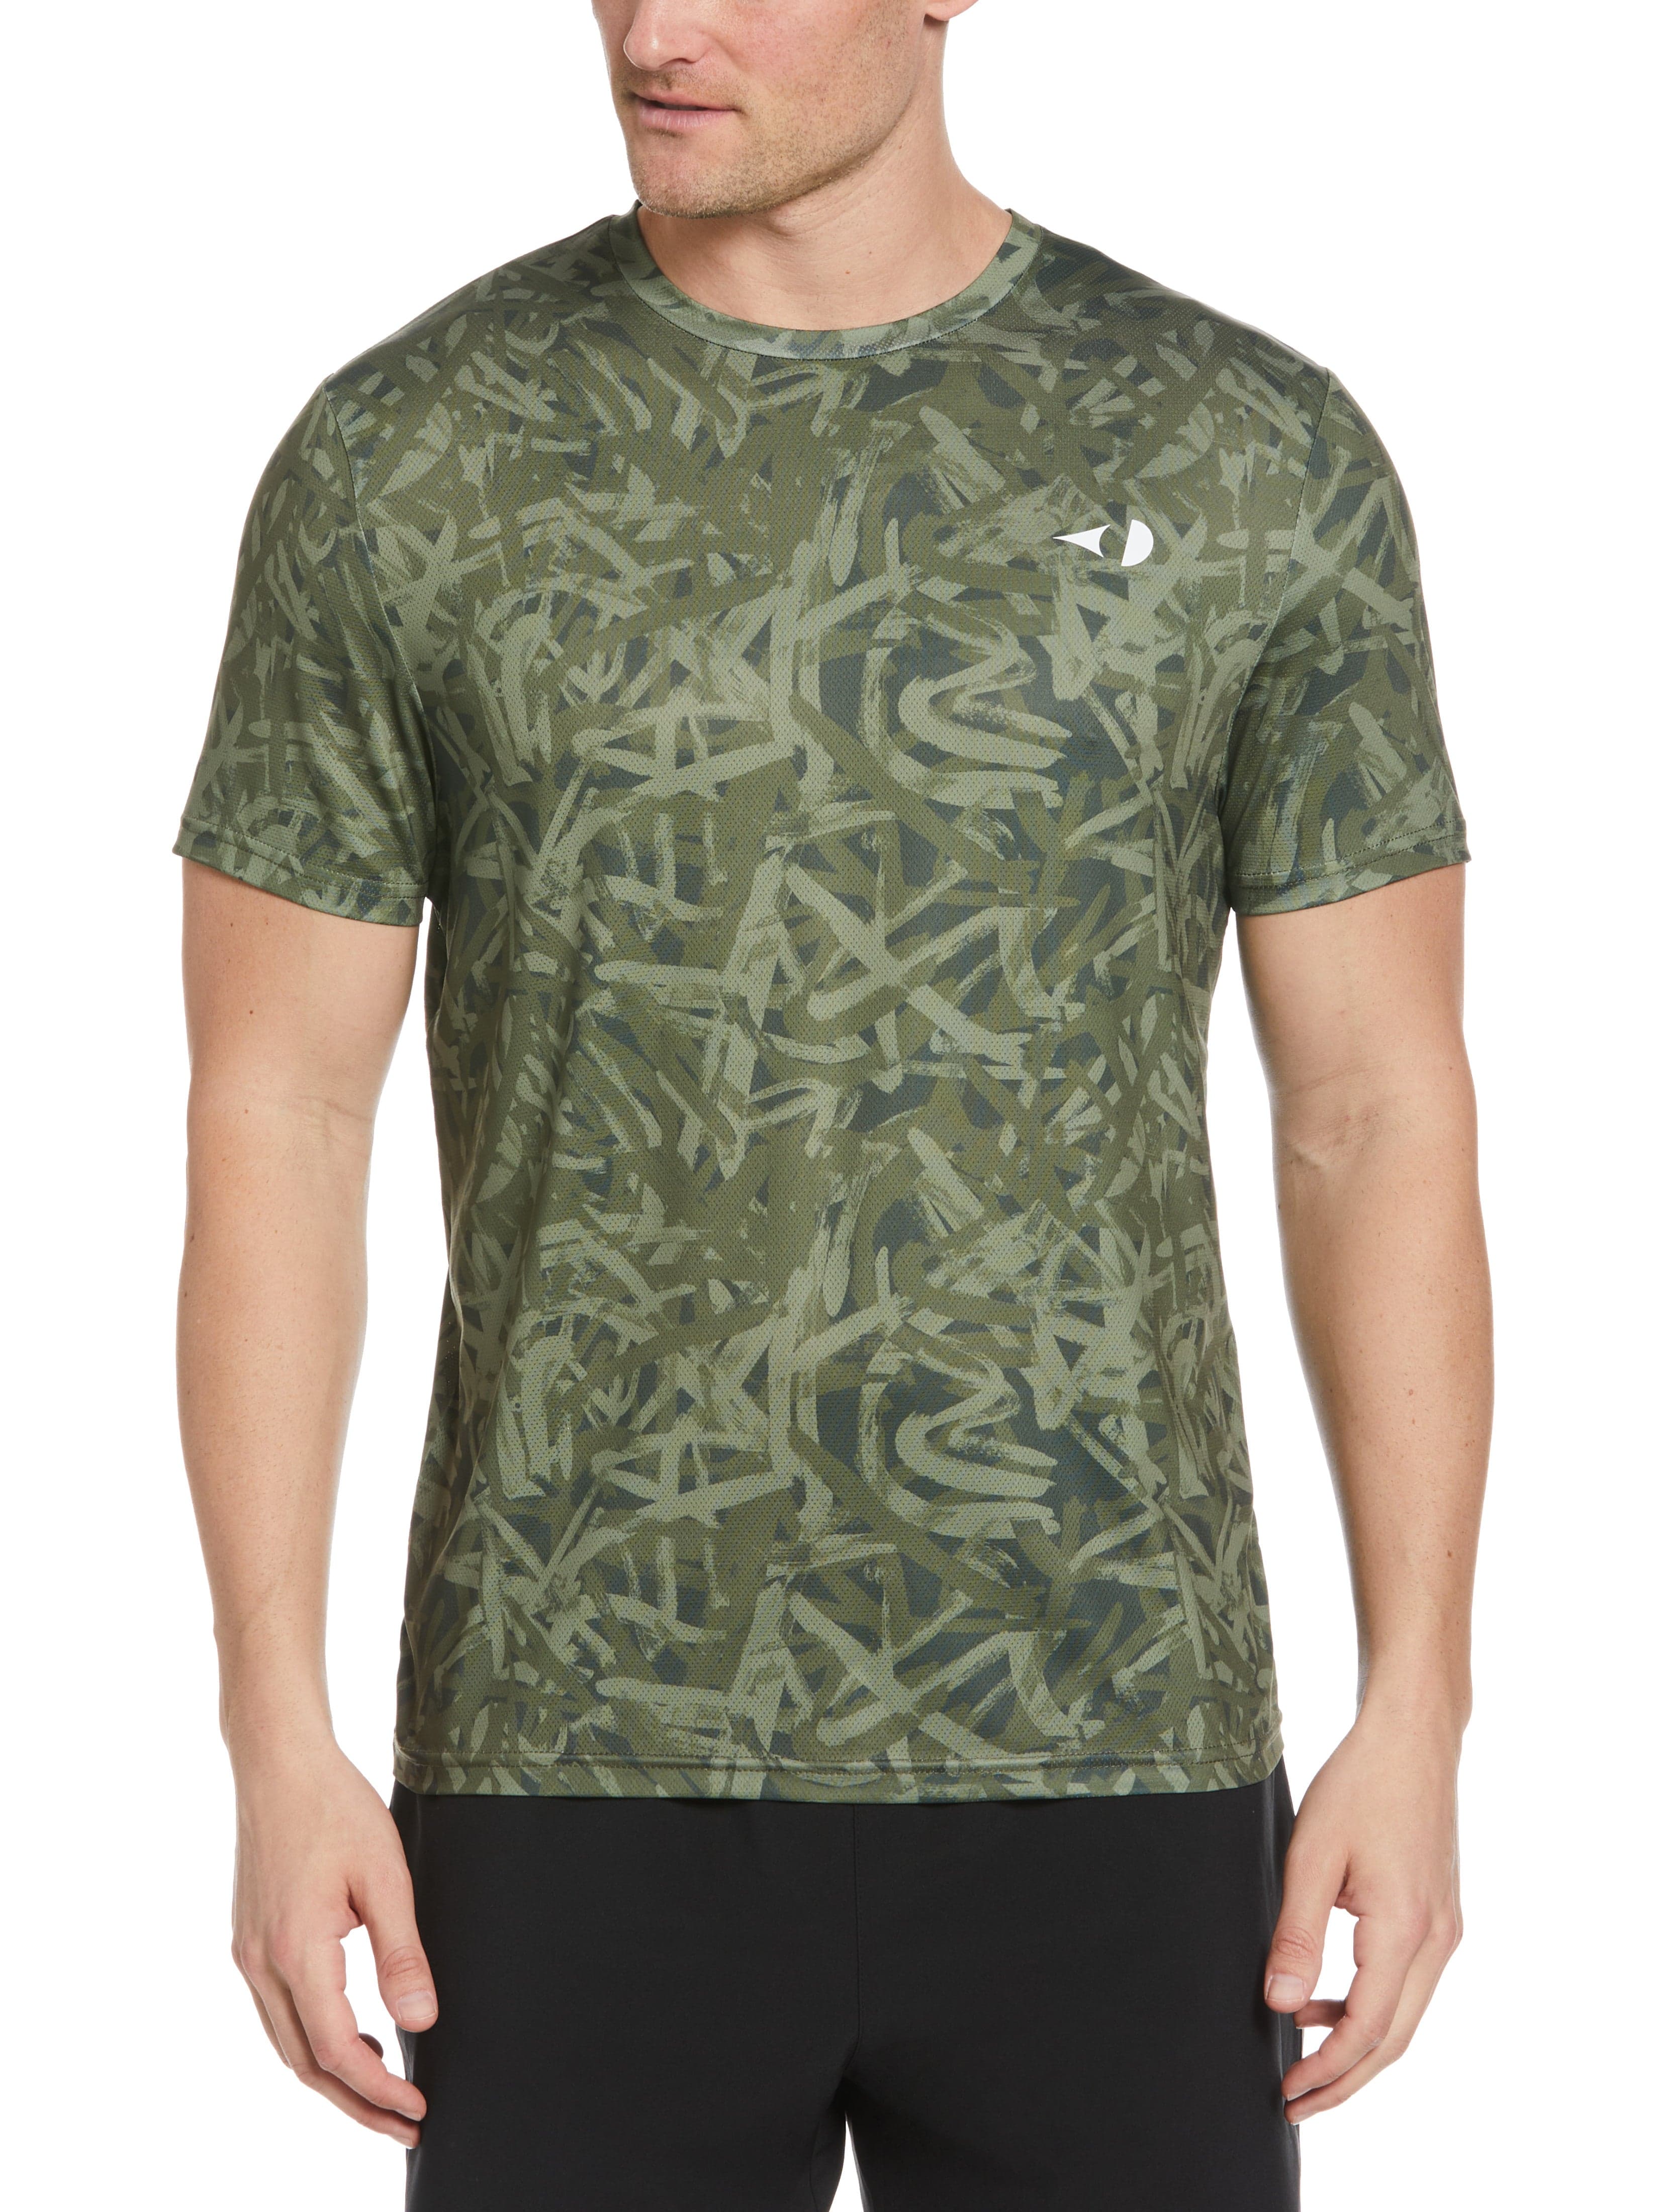 Grand Slam Mens Graffiti Print Tennis T-Shirt, Size XL, Olivine Green, Polyester/Spandex | Golf Apparel Shop